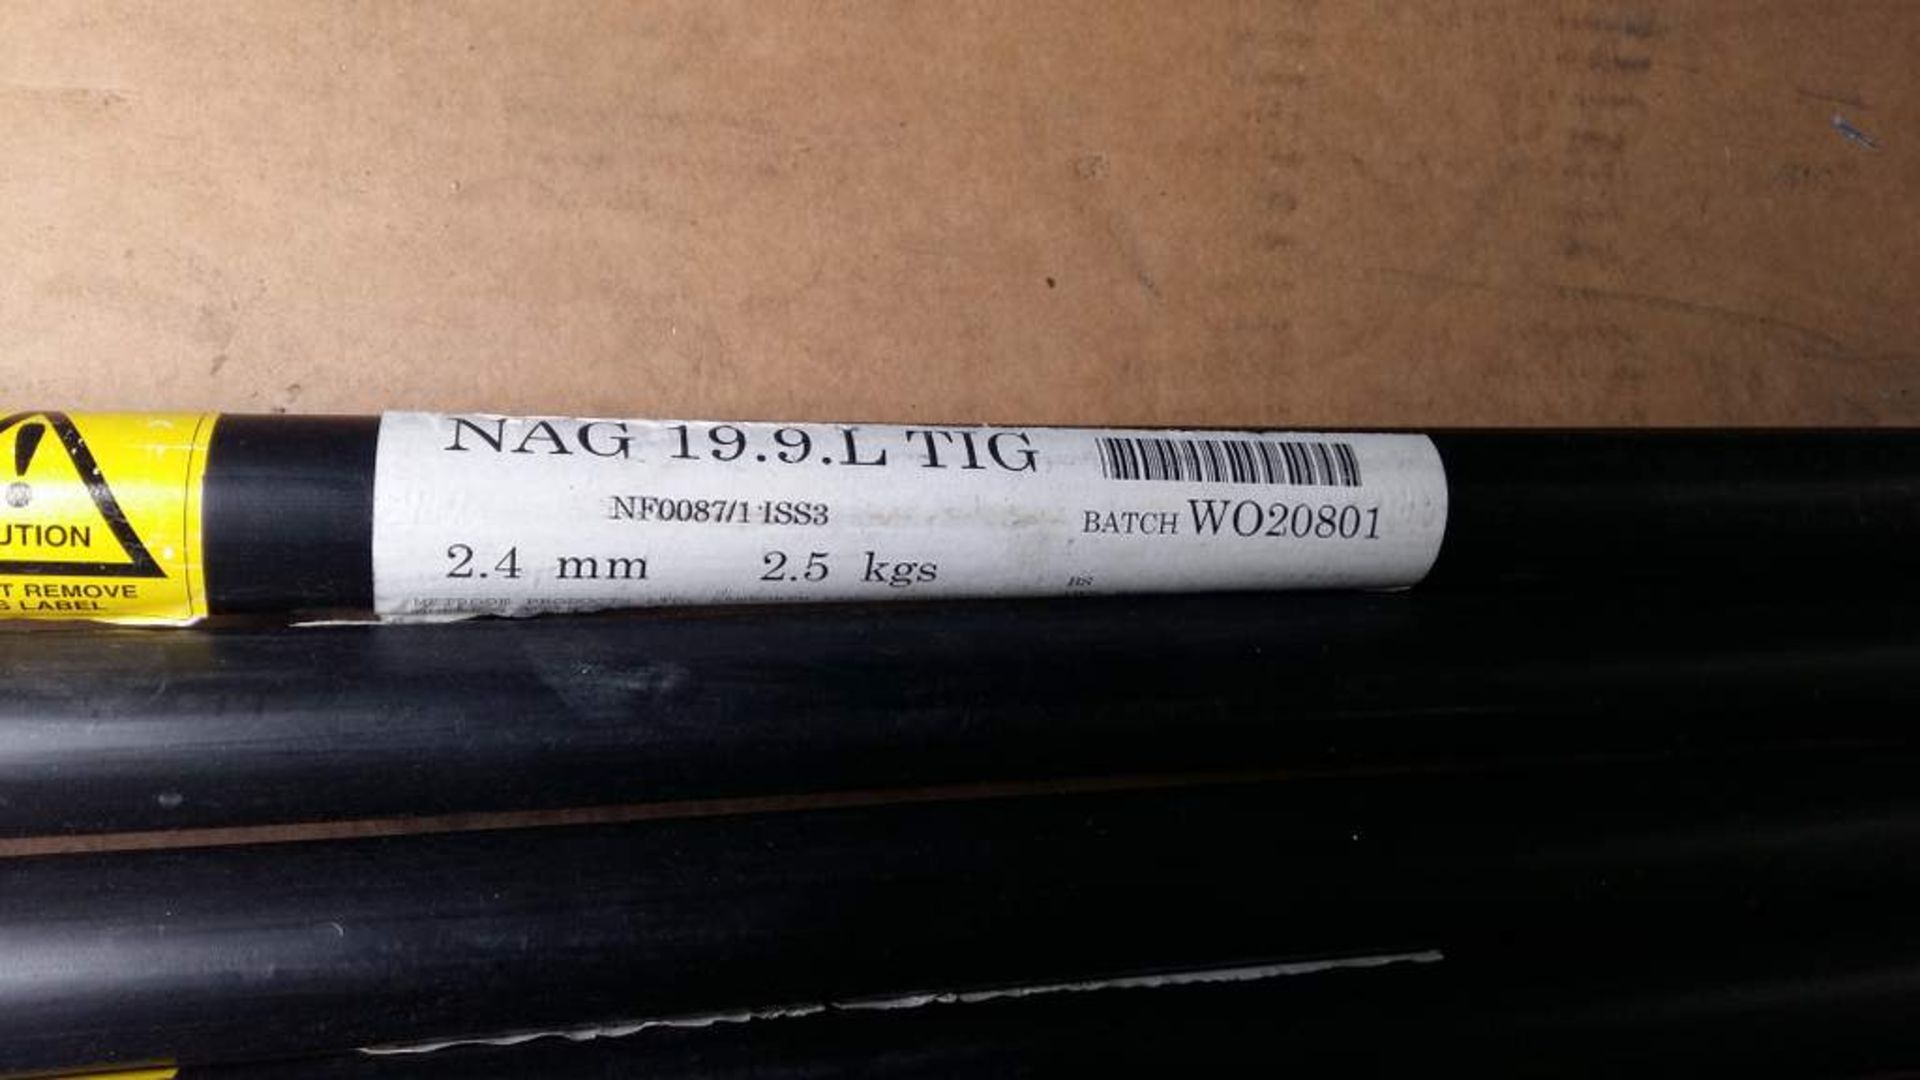 Welding rods - MAG 19.9.L TIG - 2.4mm - 2.5kgs - 5 packs - Image 2 of 2